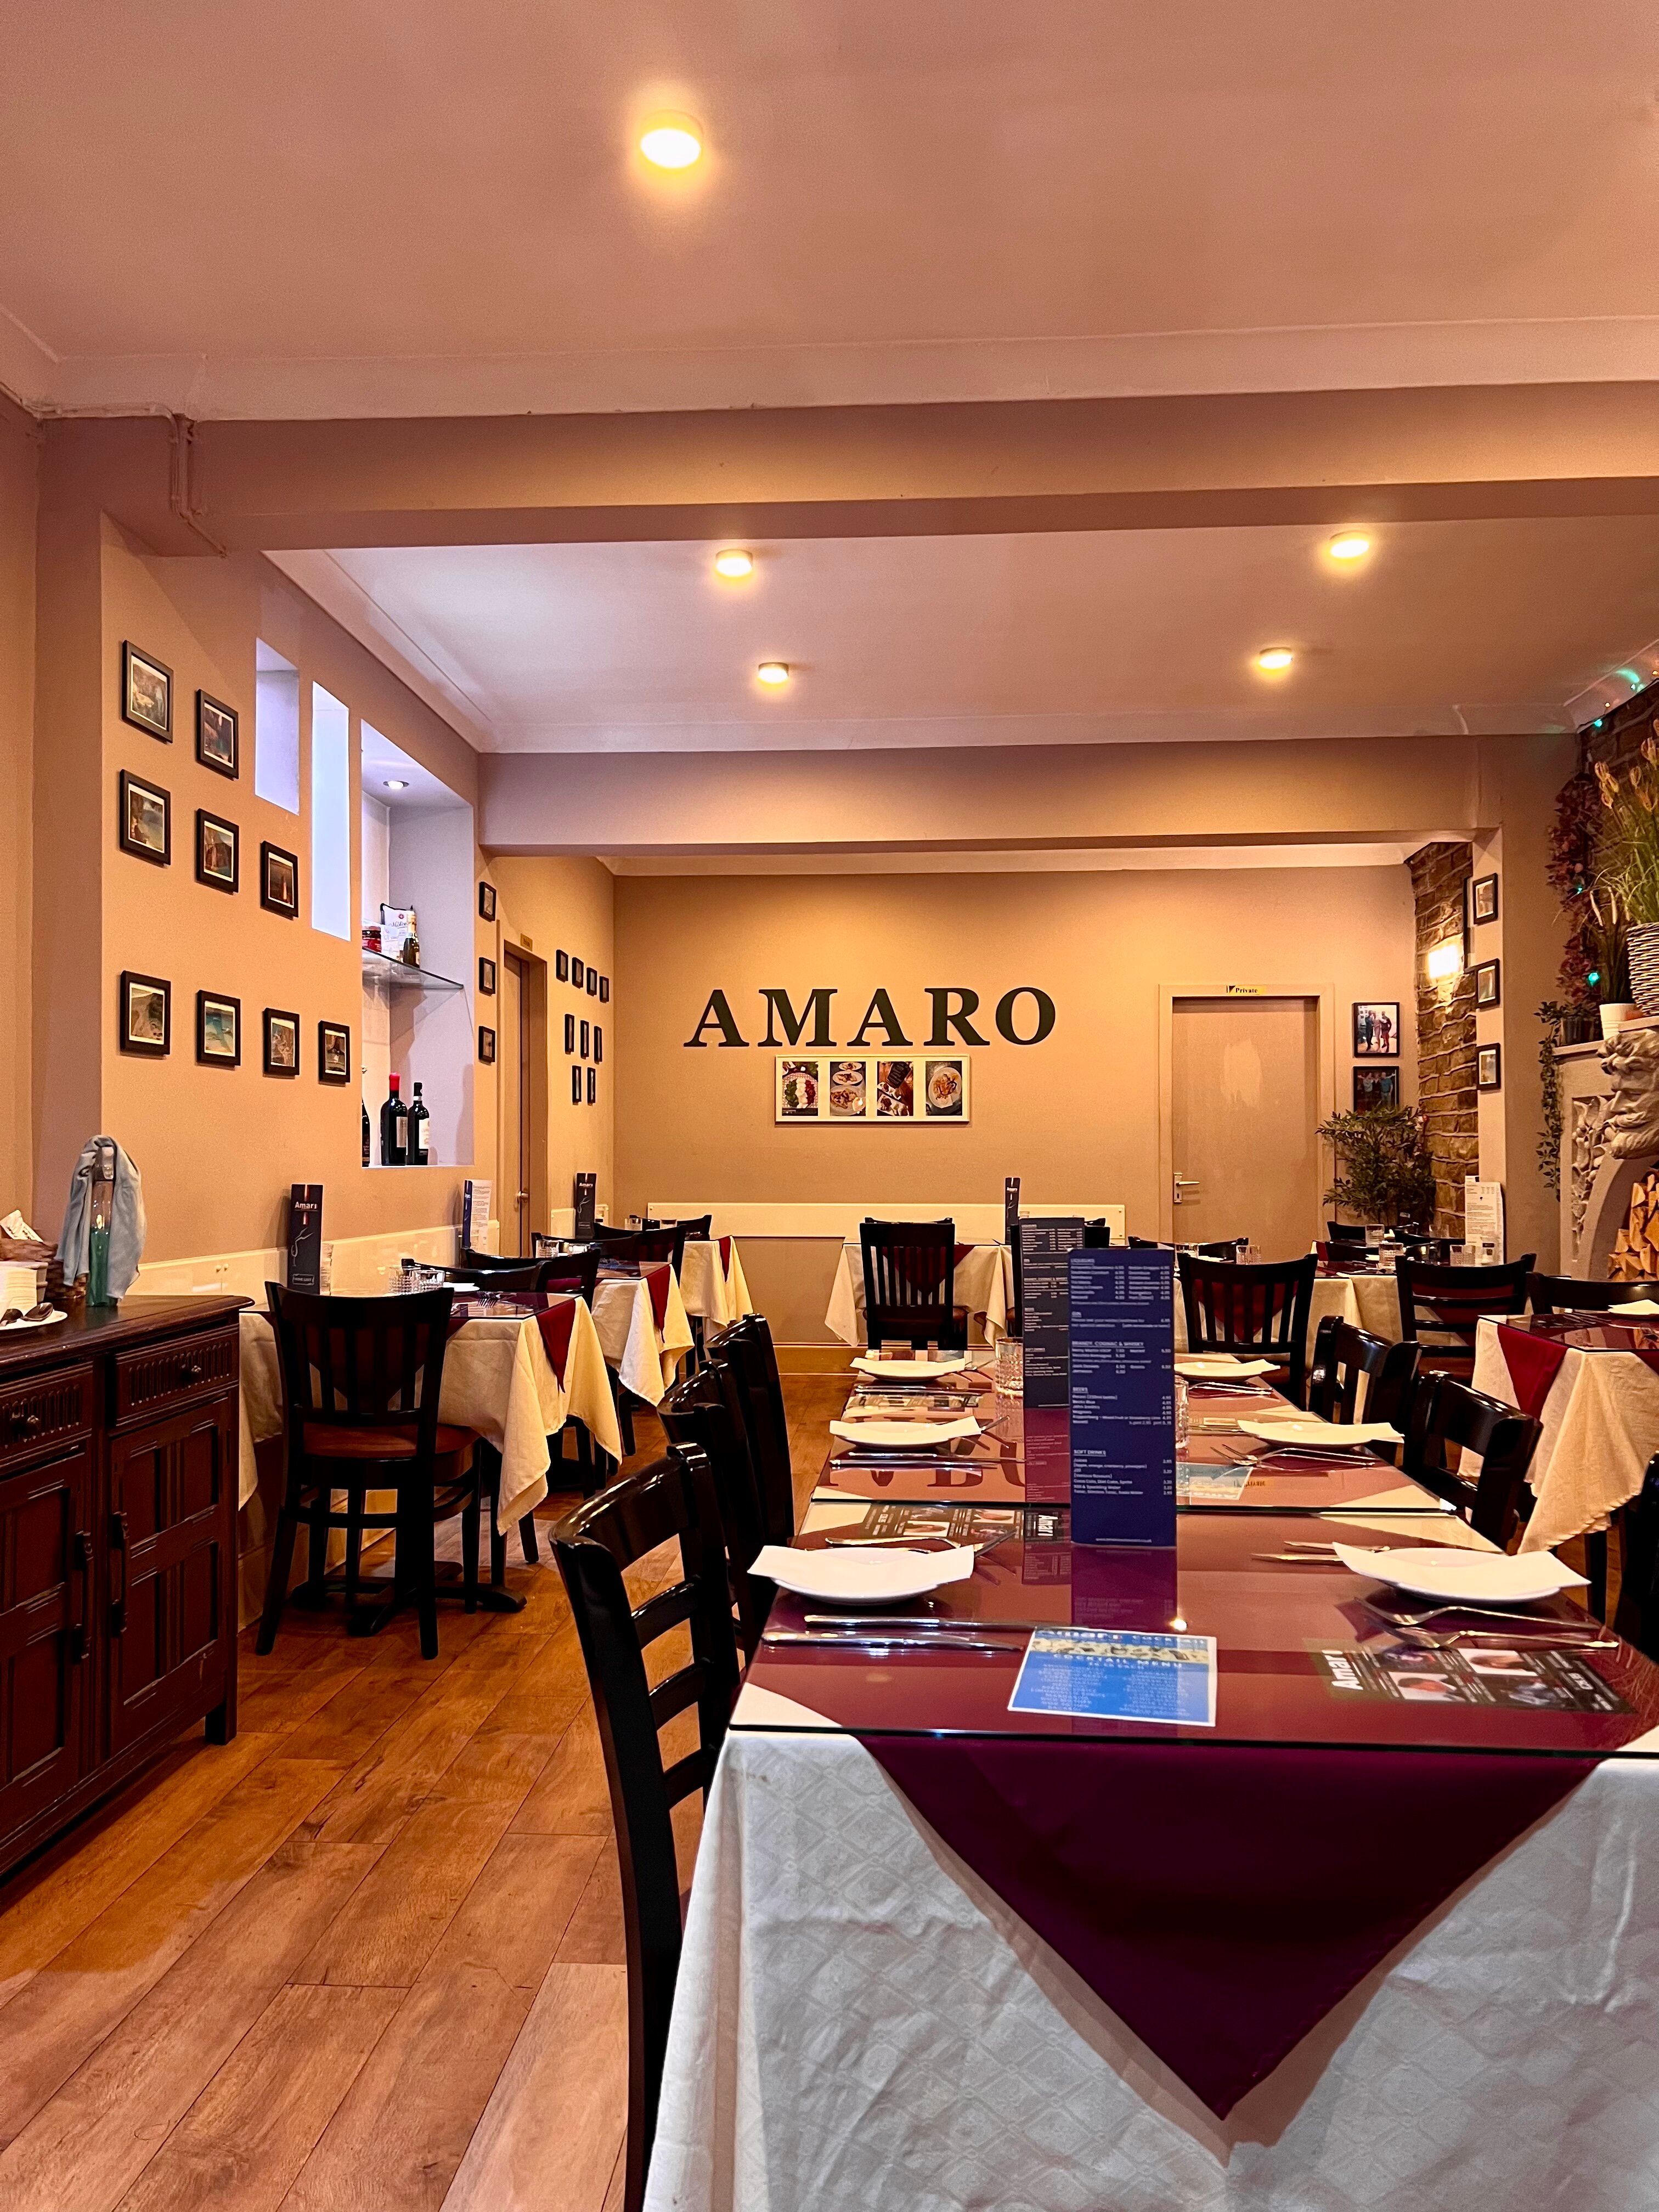 Amaro Italian Restaurant & Bar